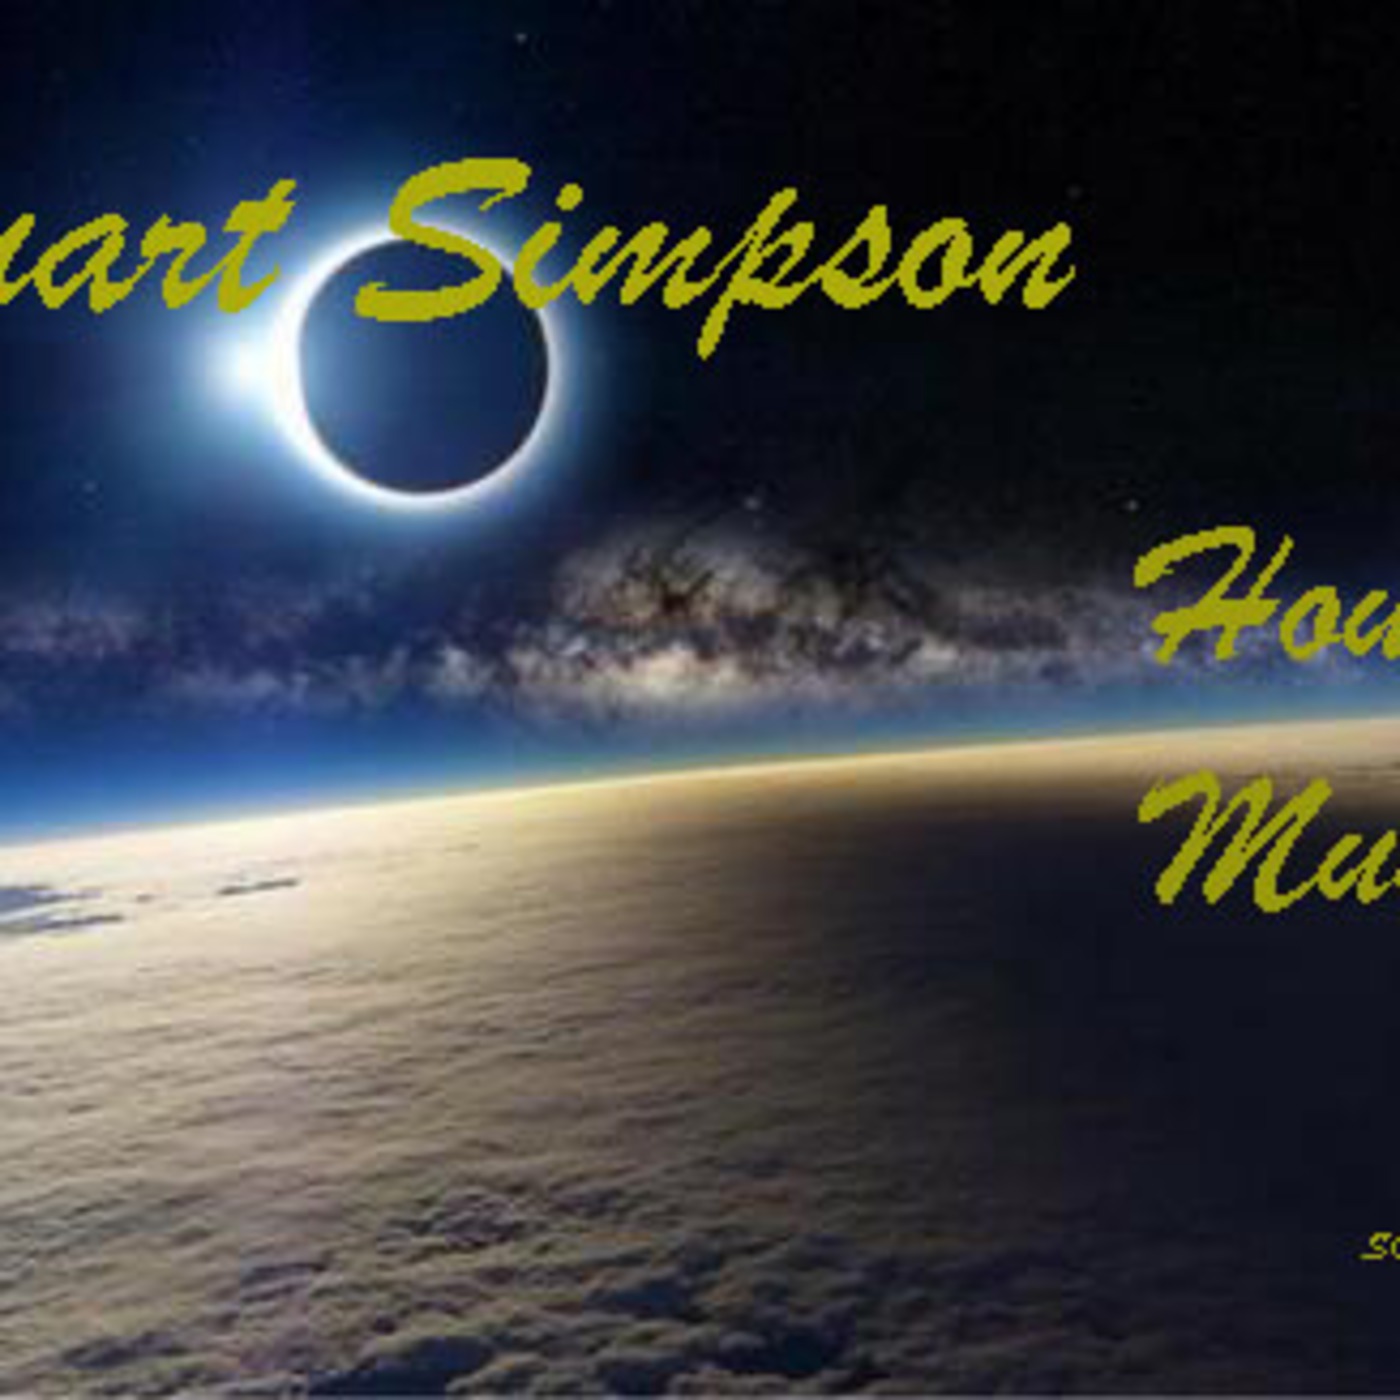 Stuart Simpson's House Music ep 1